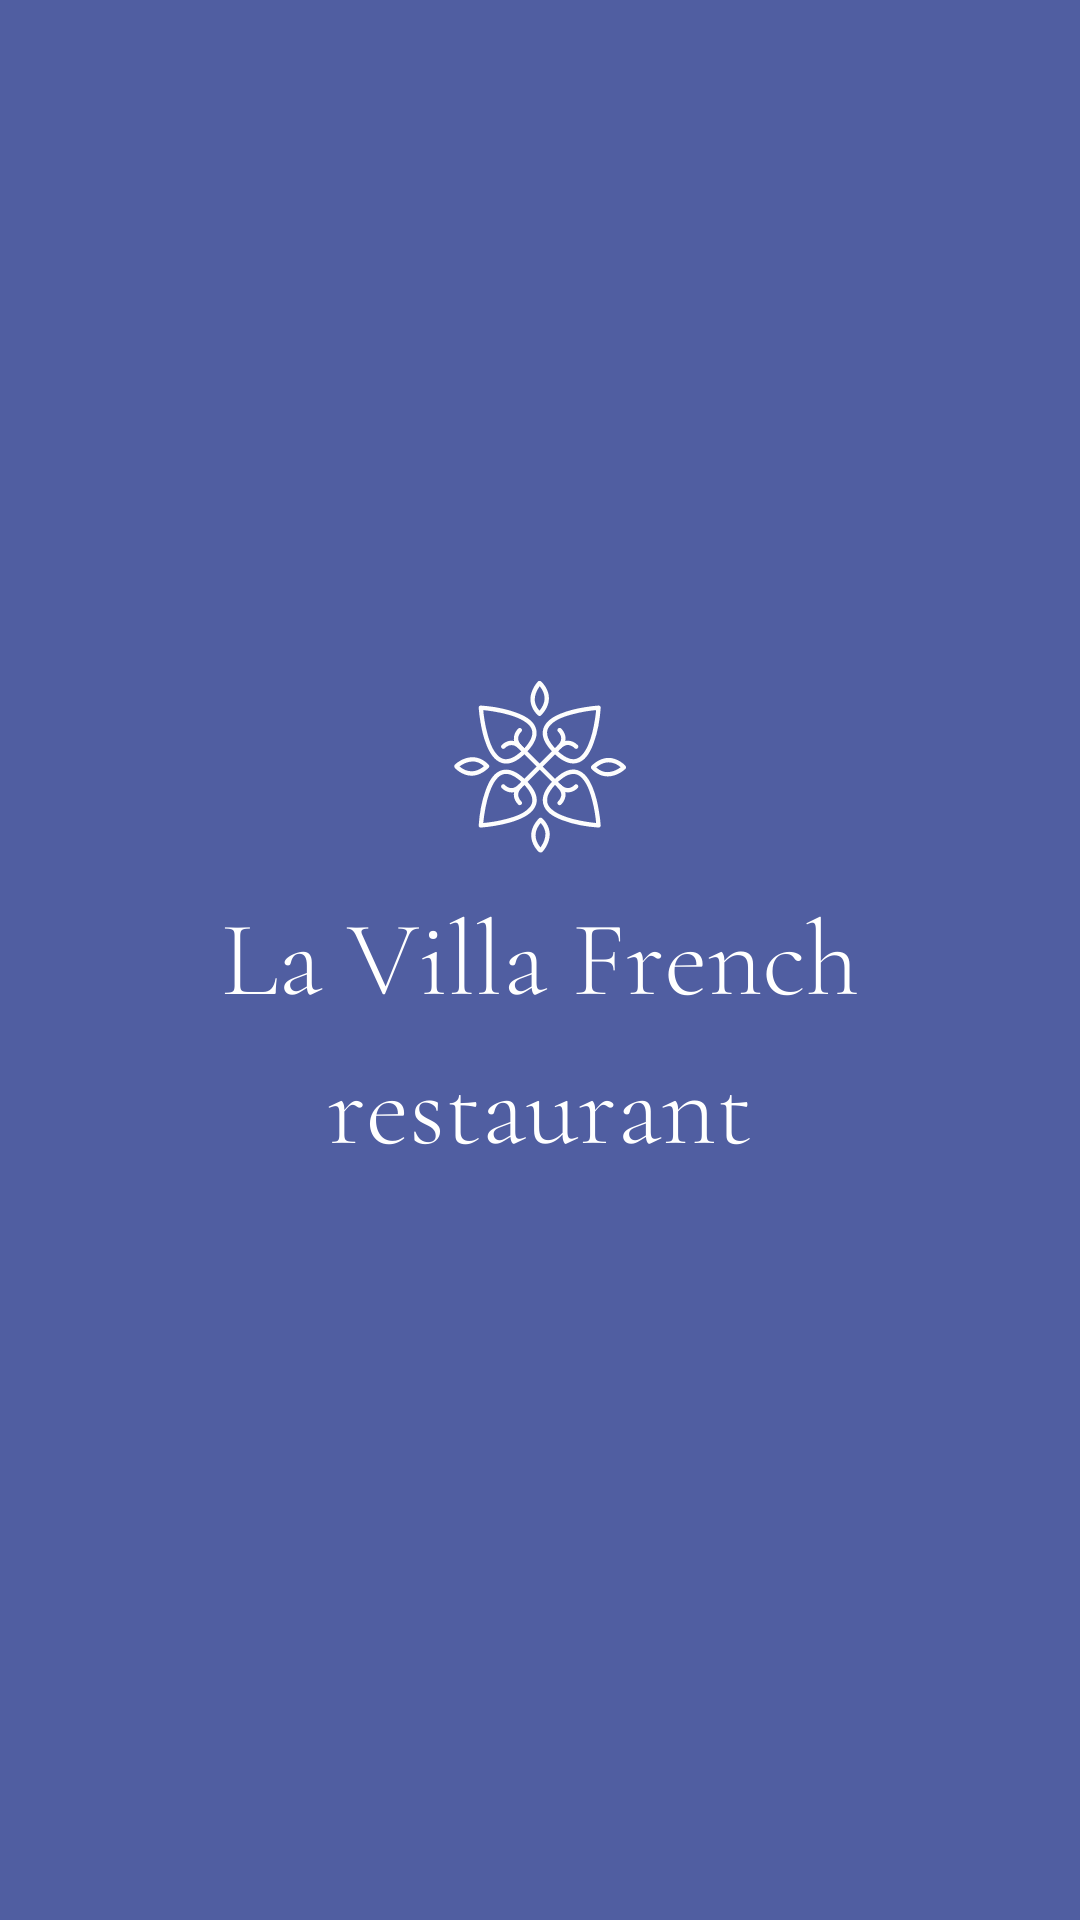 La villa french restaurant